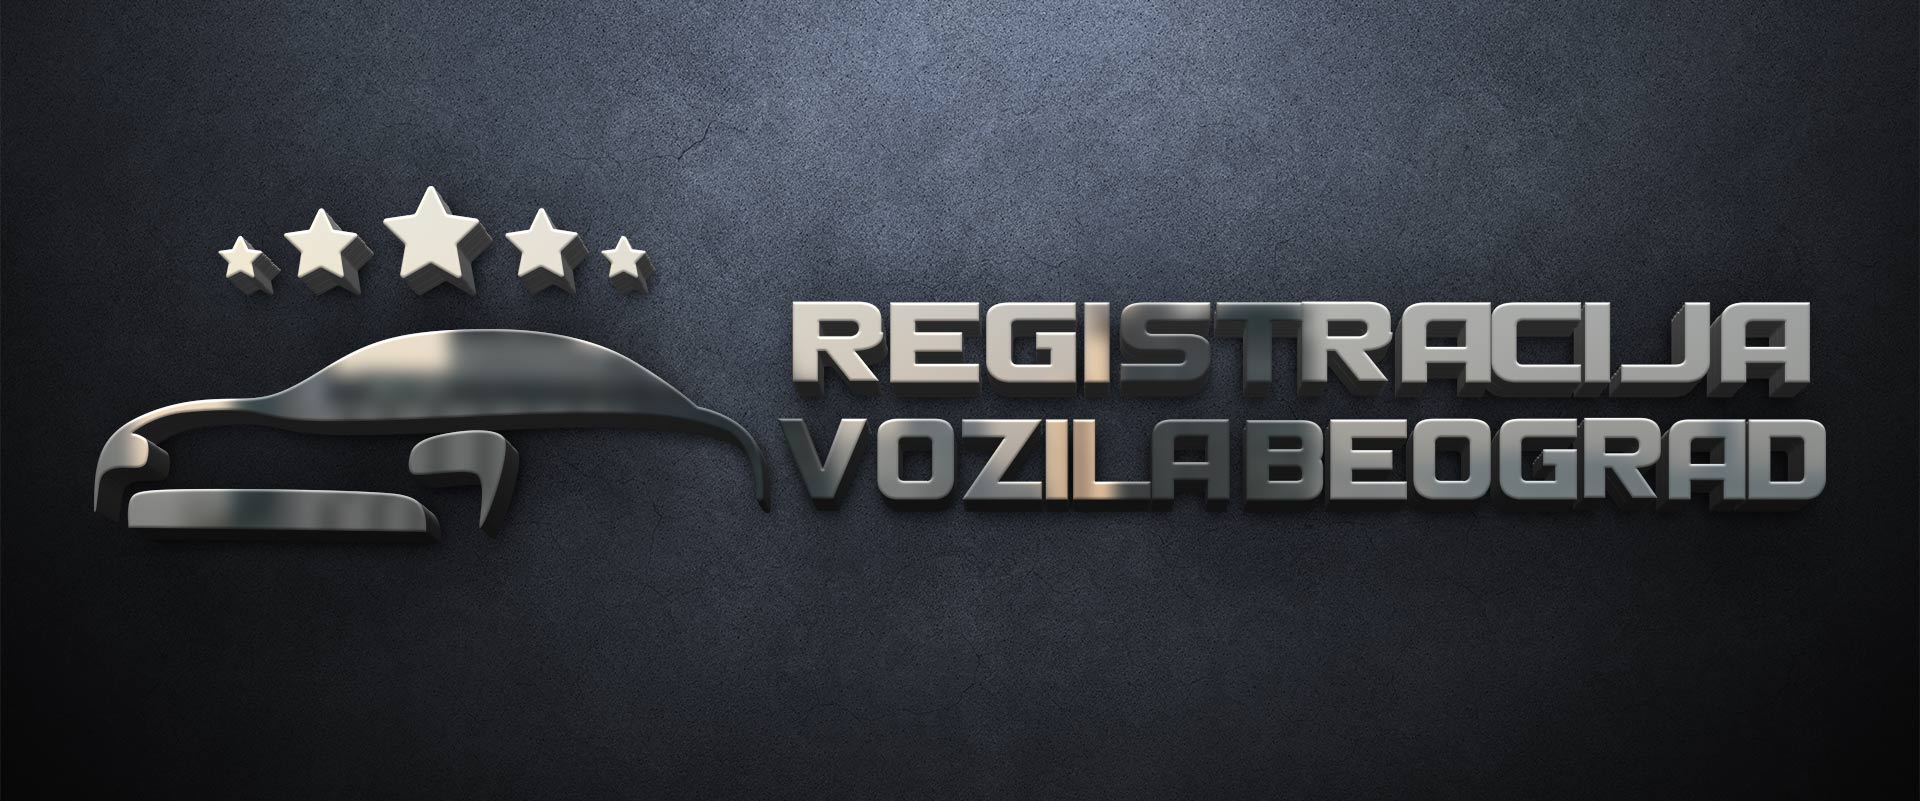 Registracija vozila Beograd | 404